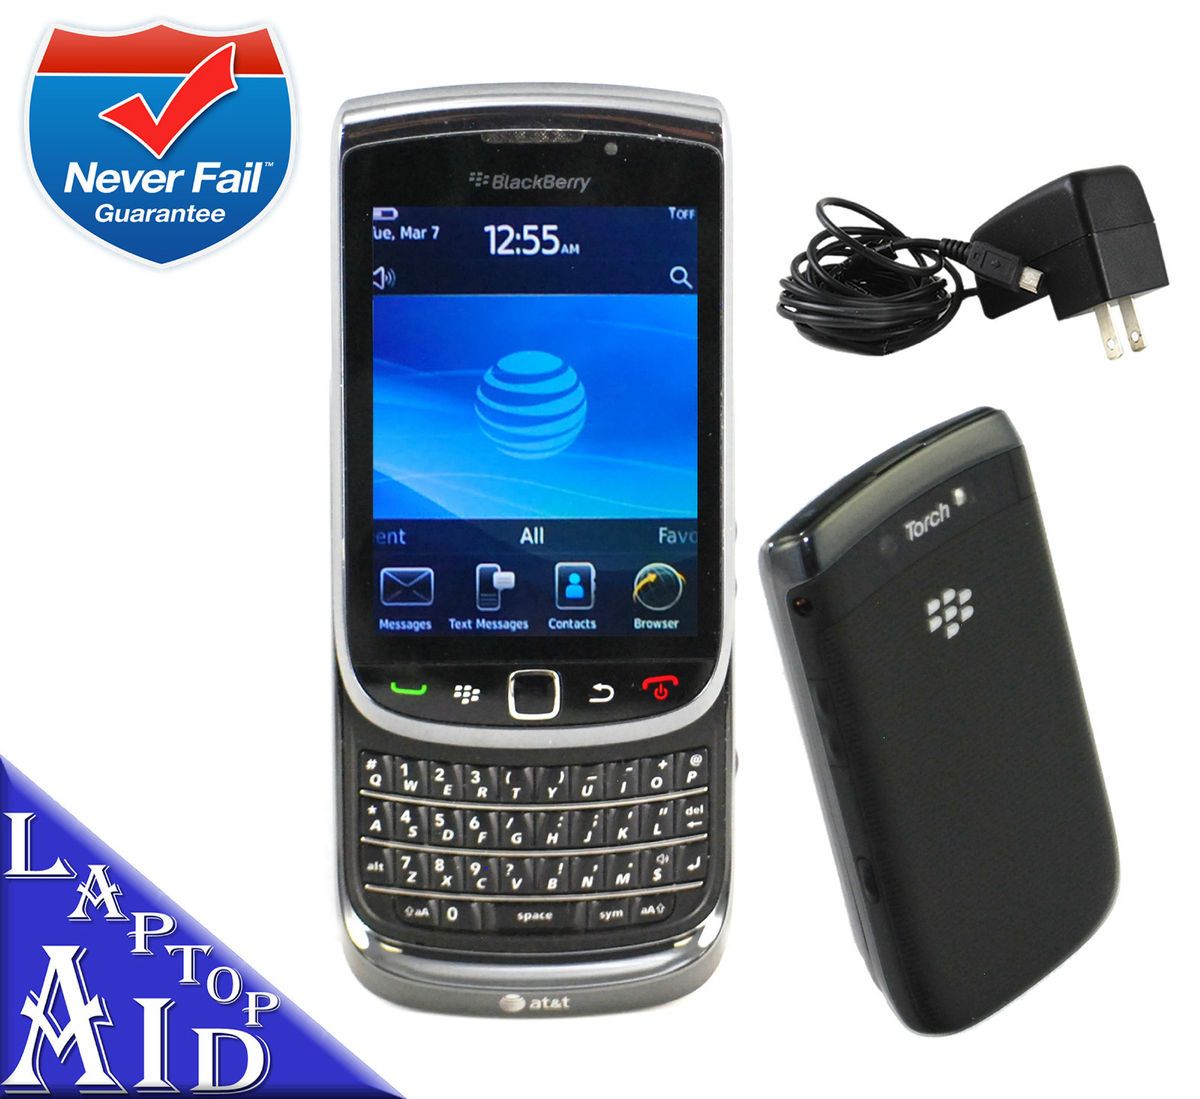 Unlocked Rim Blackberry Torch 4GB 9800 Black at T Great Smartphone